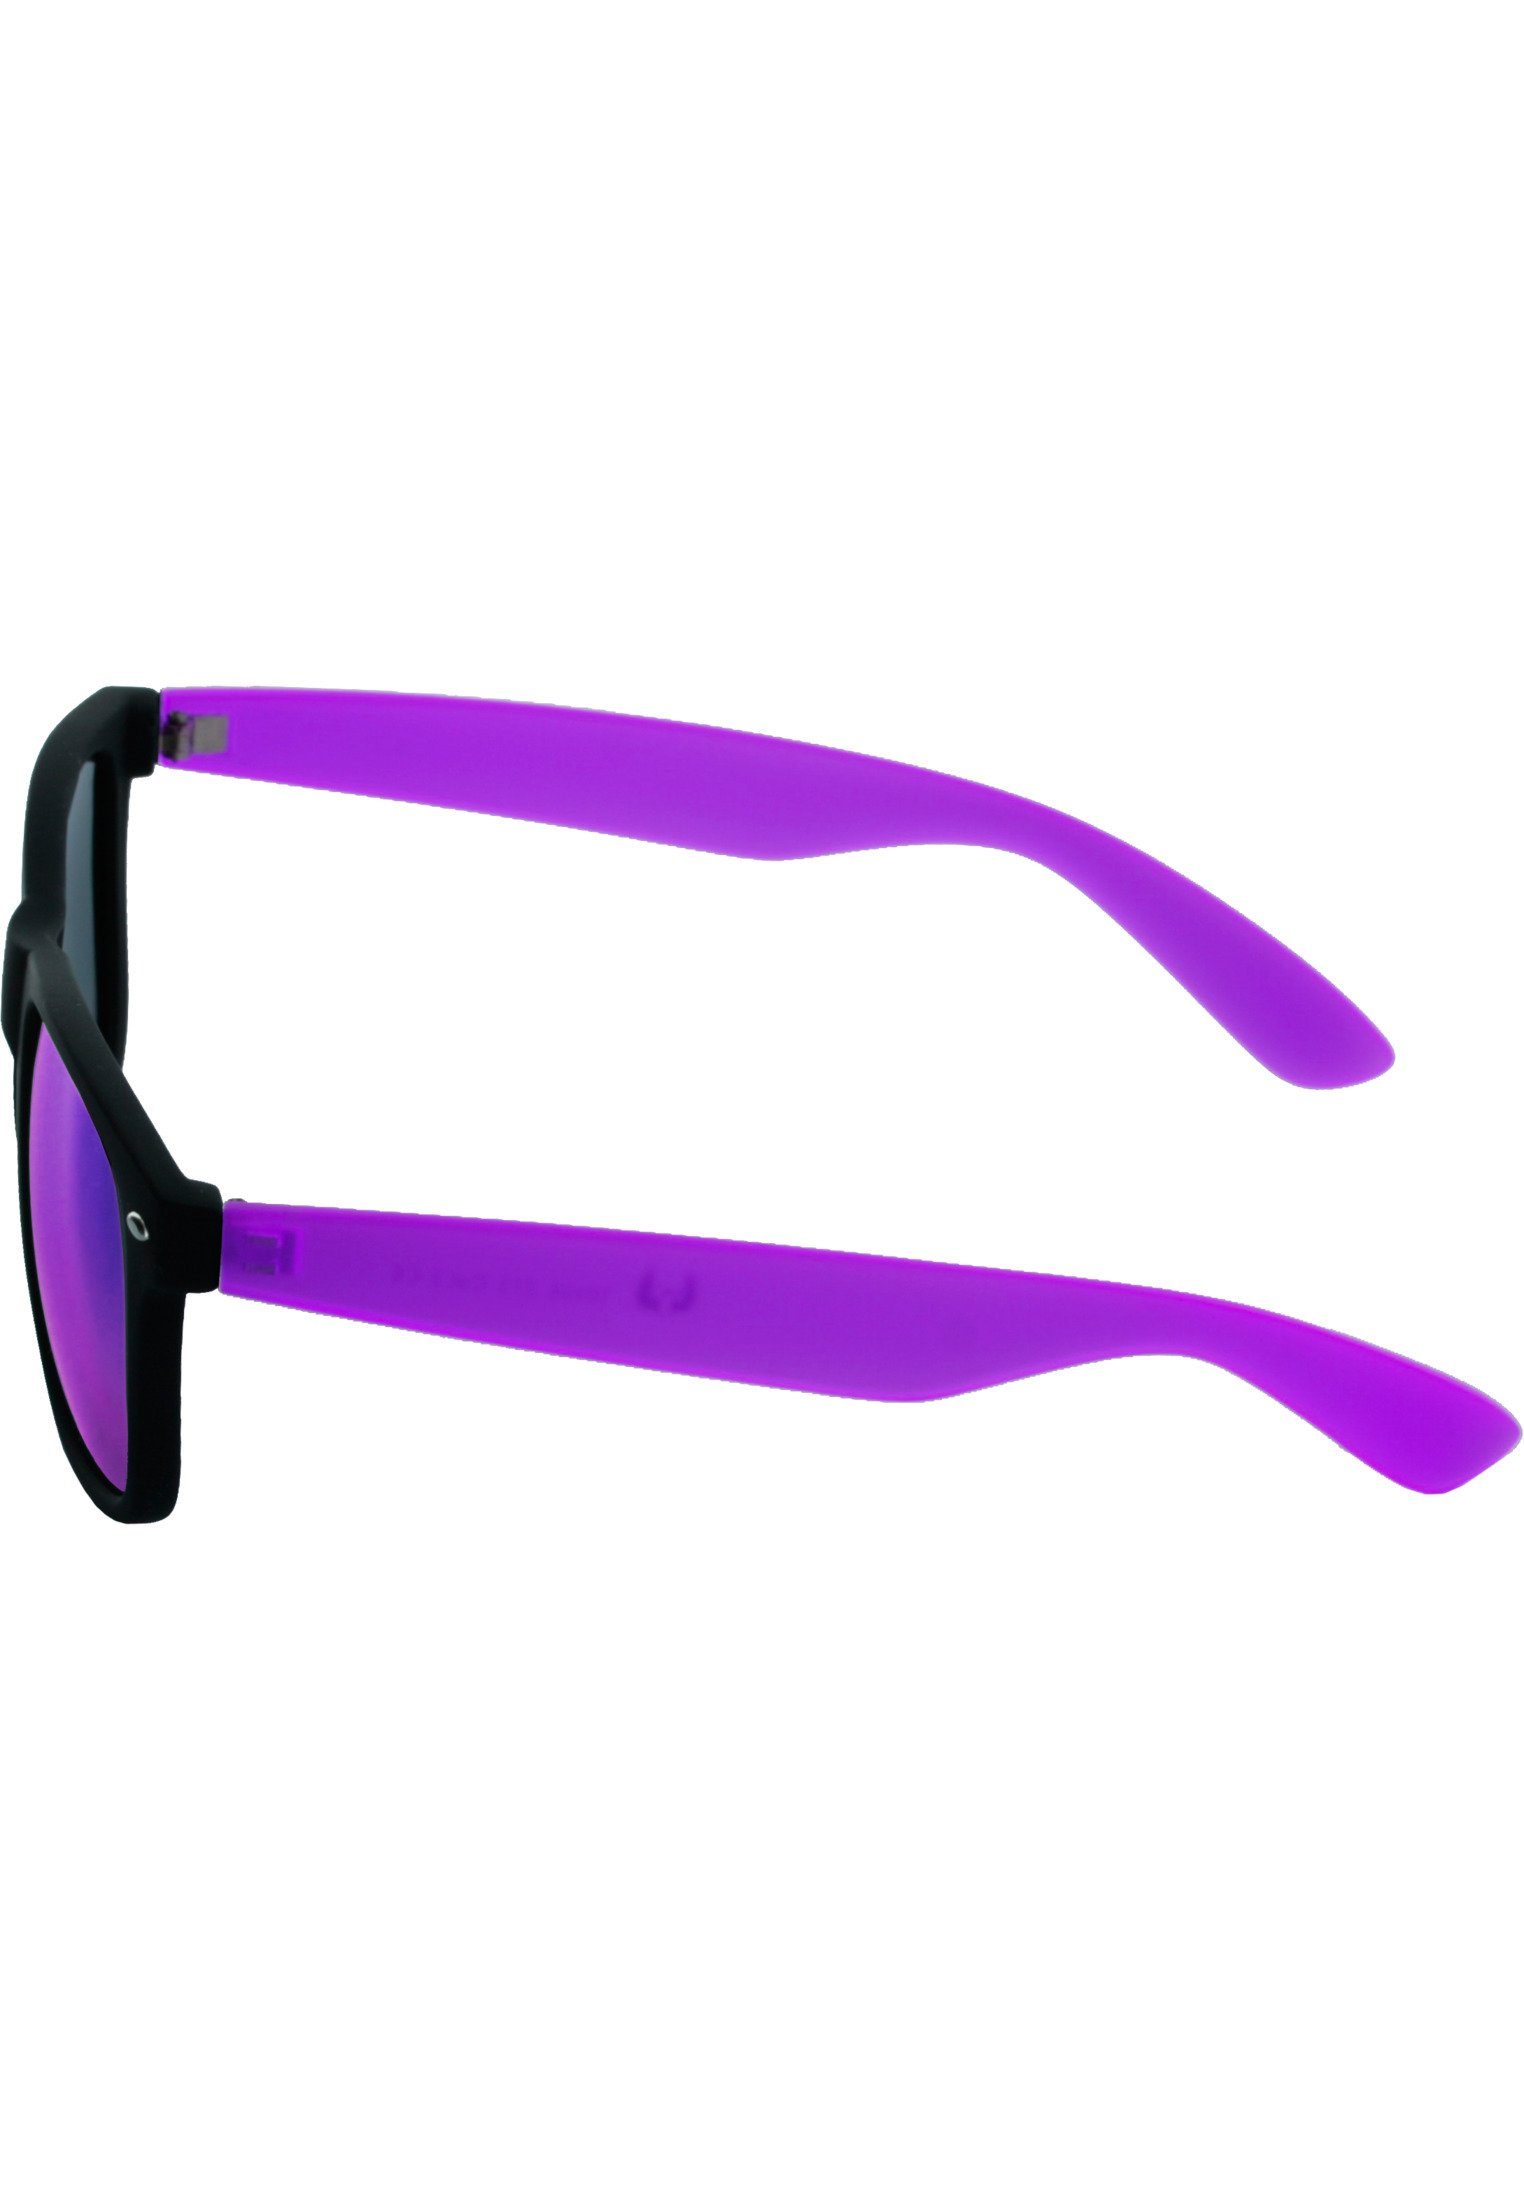 Sunglasses Sonnenbrille Likoma blk/pur/pur MSTRDS Accessoires Mirror